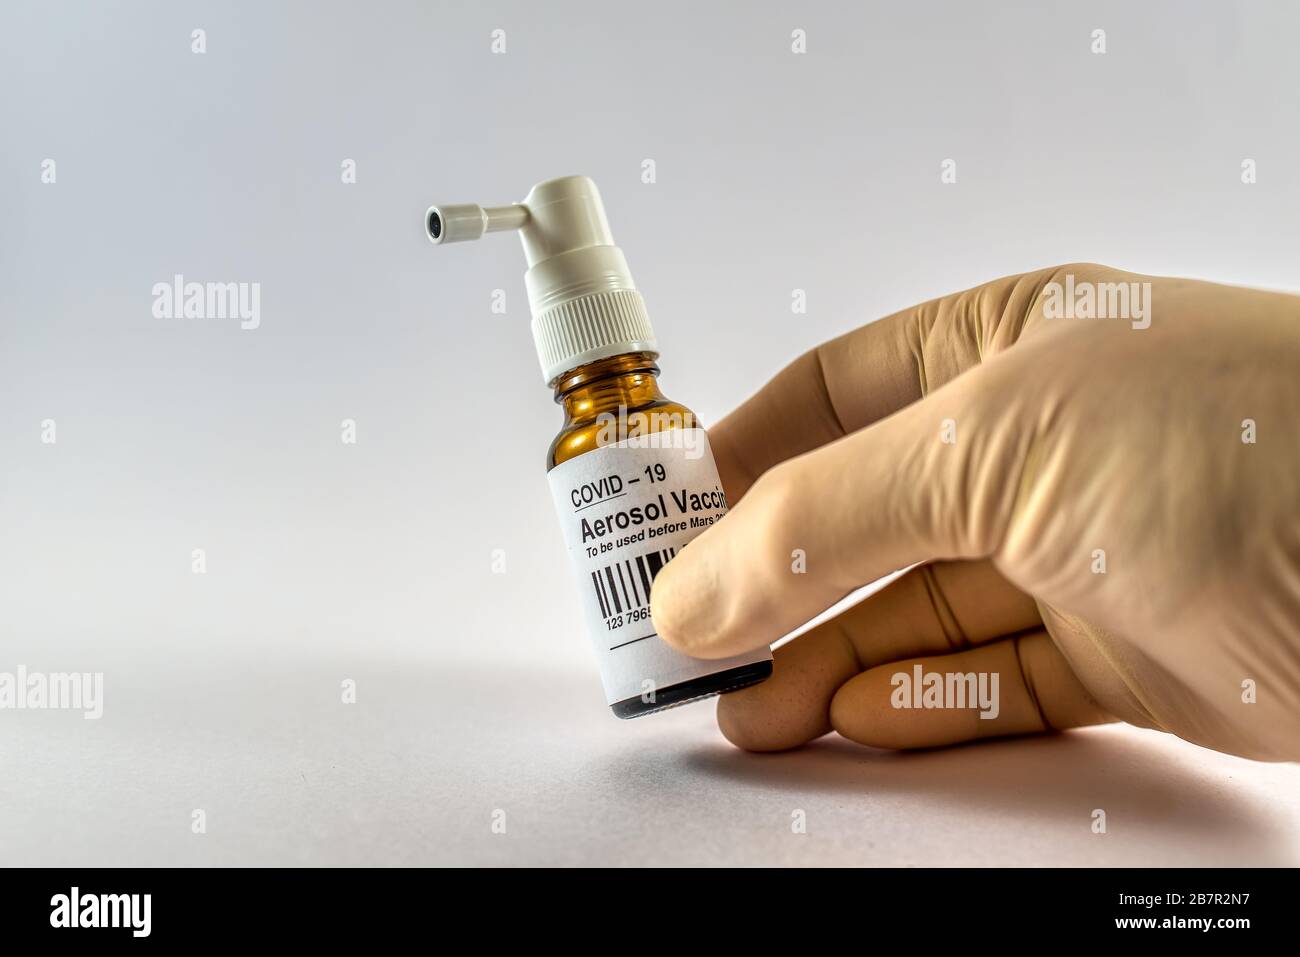 Hand with latex glove holding a bottle of corona aerosol vaccine against white background, Denmark, Mars 17, 2020 Stock Photo